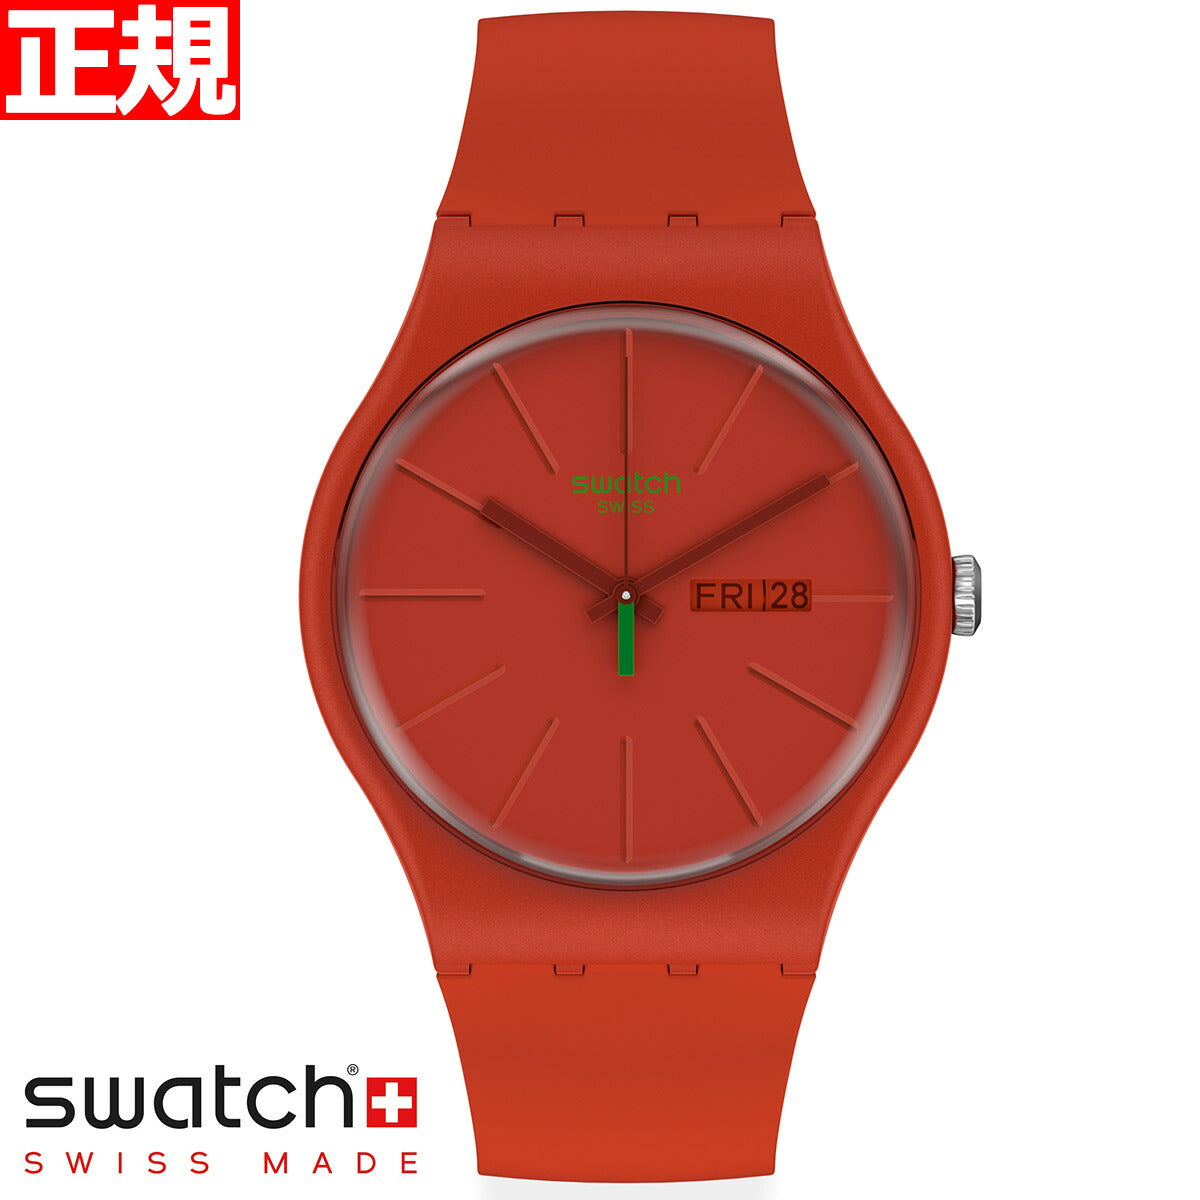 swatch スウォッチ 腕時計 メンズ レディース オリジナルズ ニュー 